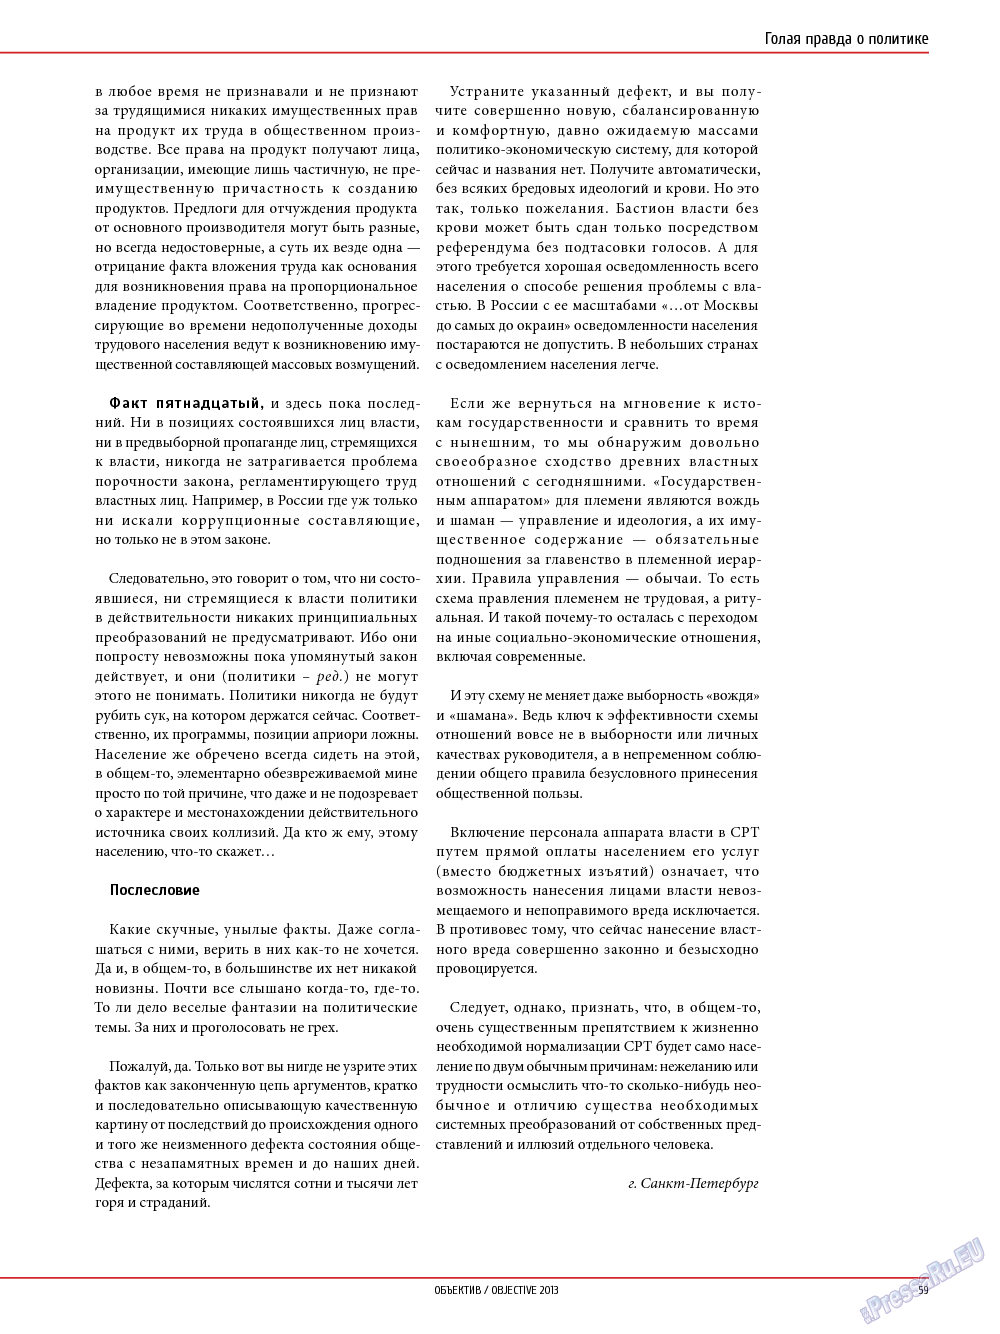 Объектив EU, журнал. 2013 №4 стр.59